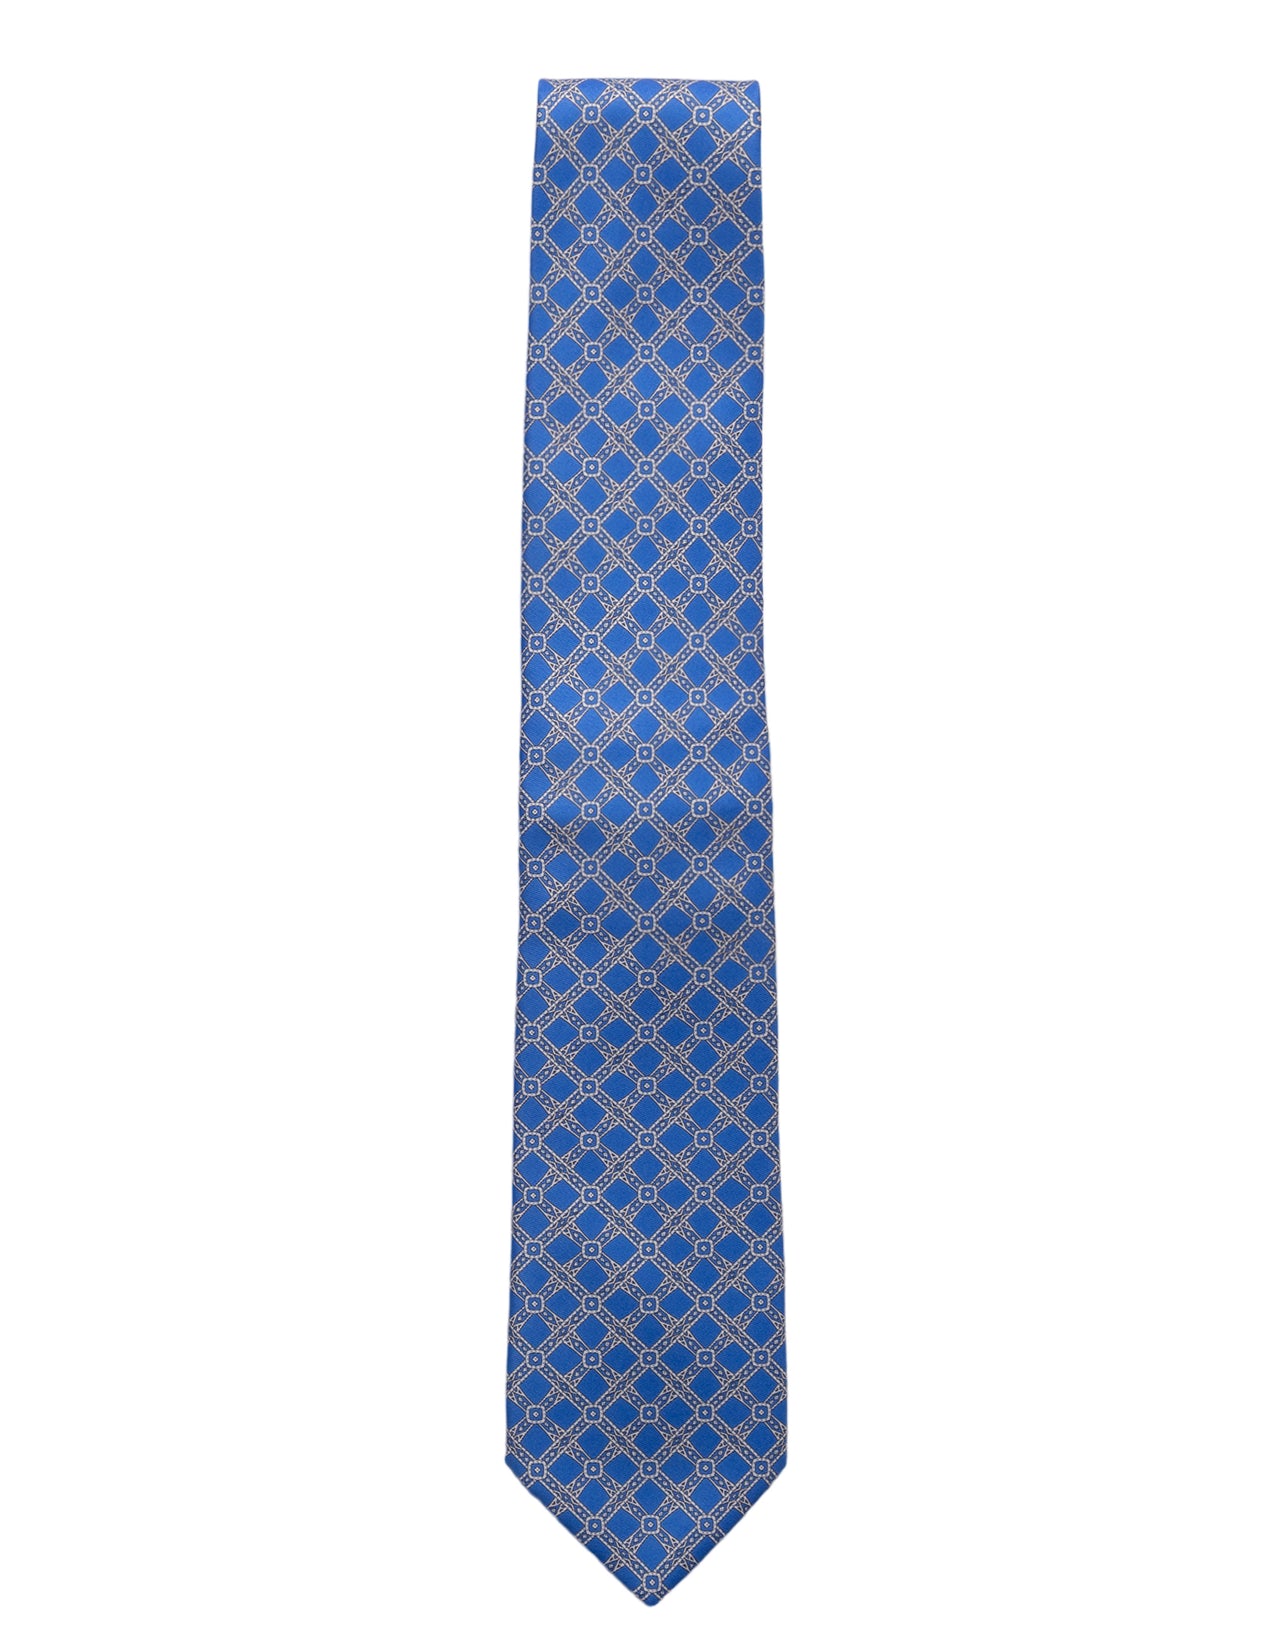 STEFANO RICCI Silk Tie & Pocket Square Set LIGHT BLUE/WHITE